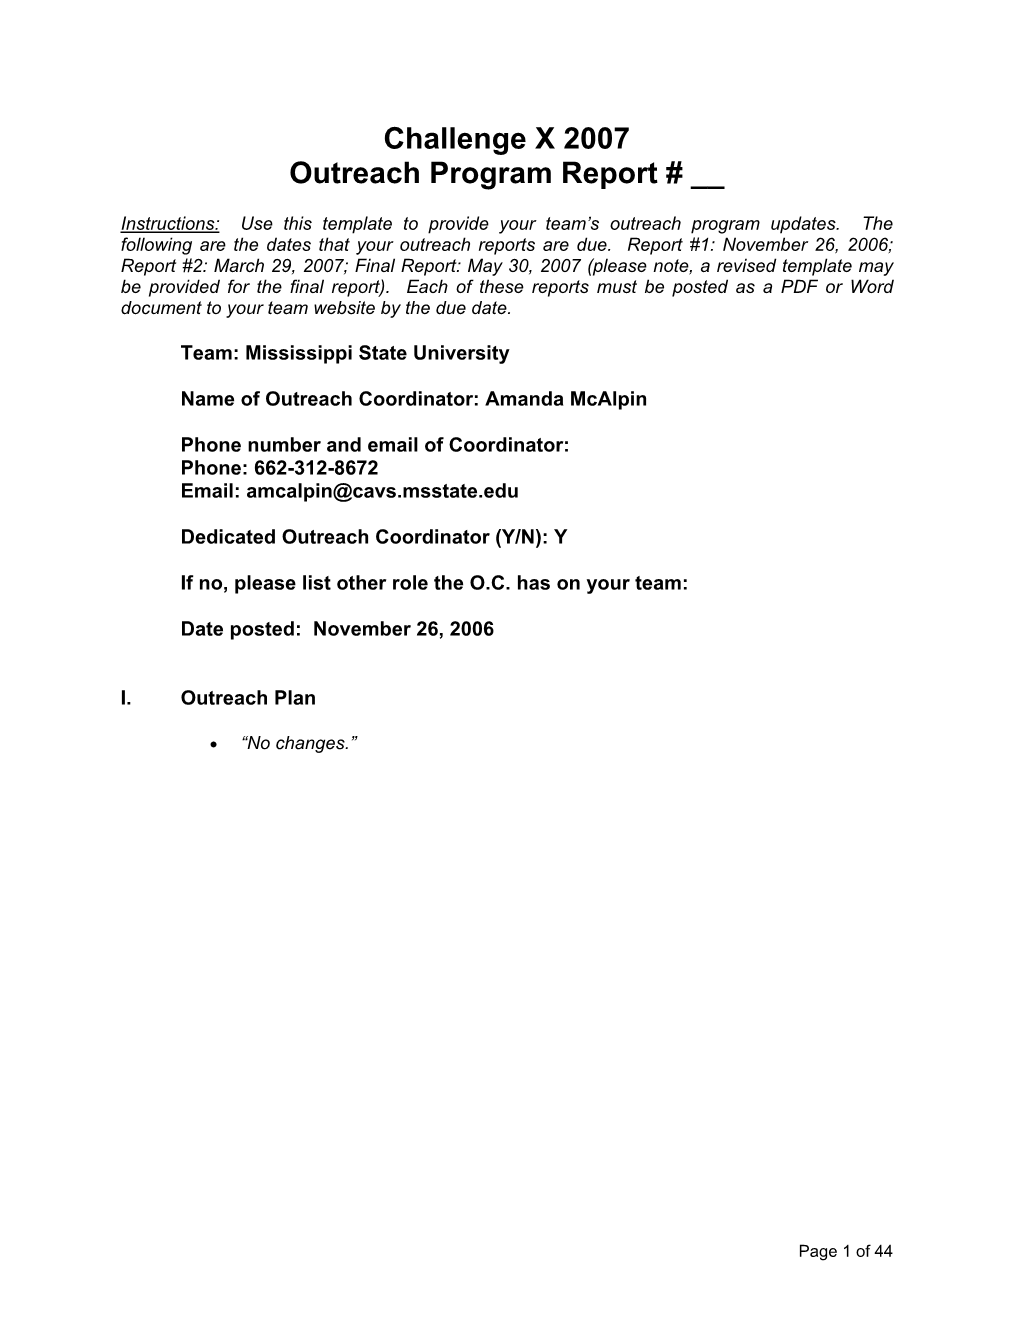 Challenge X 2007 Outreach Program Report # __